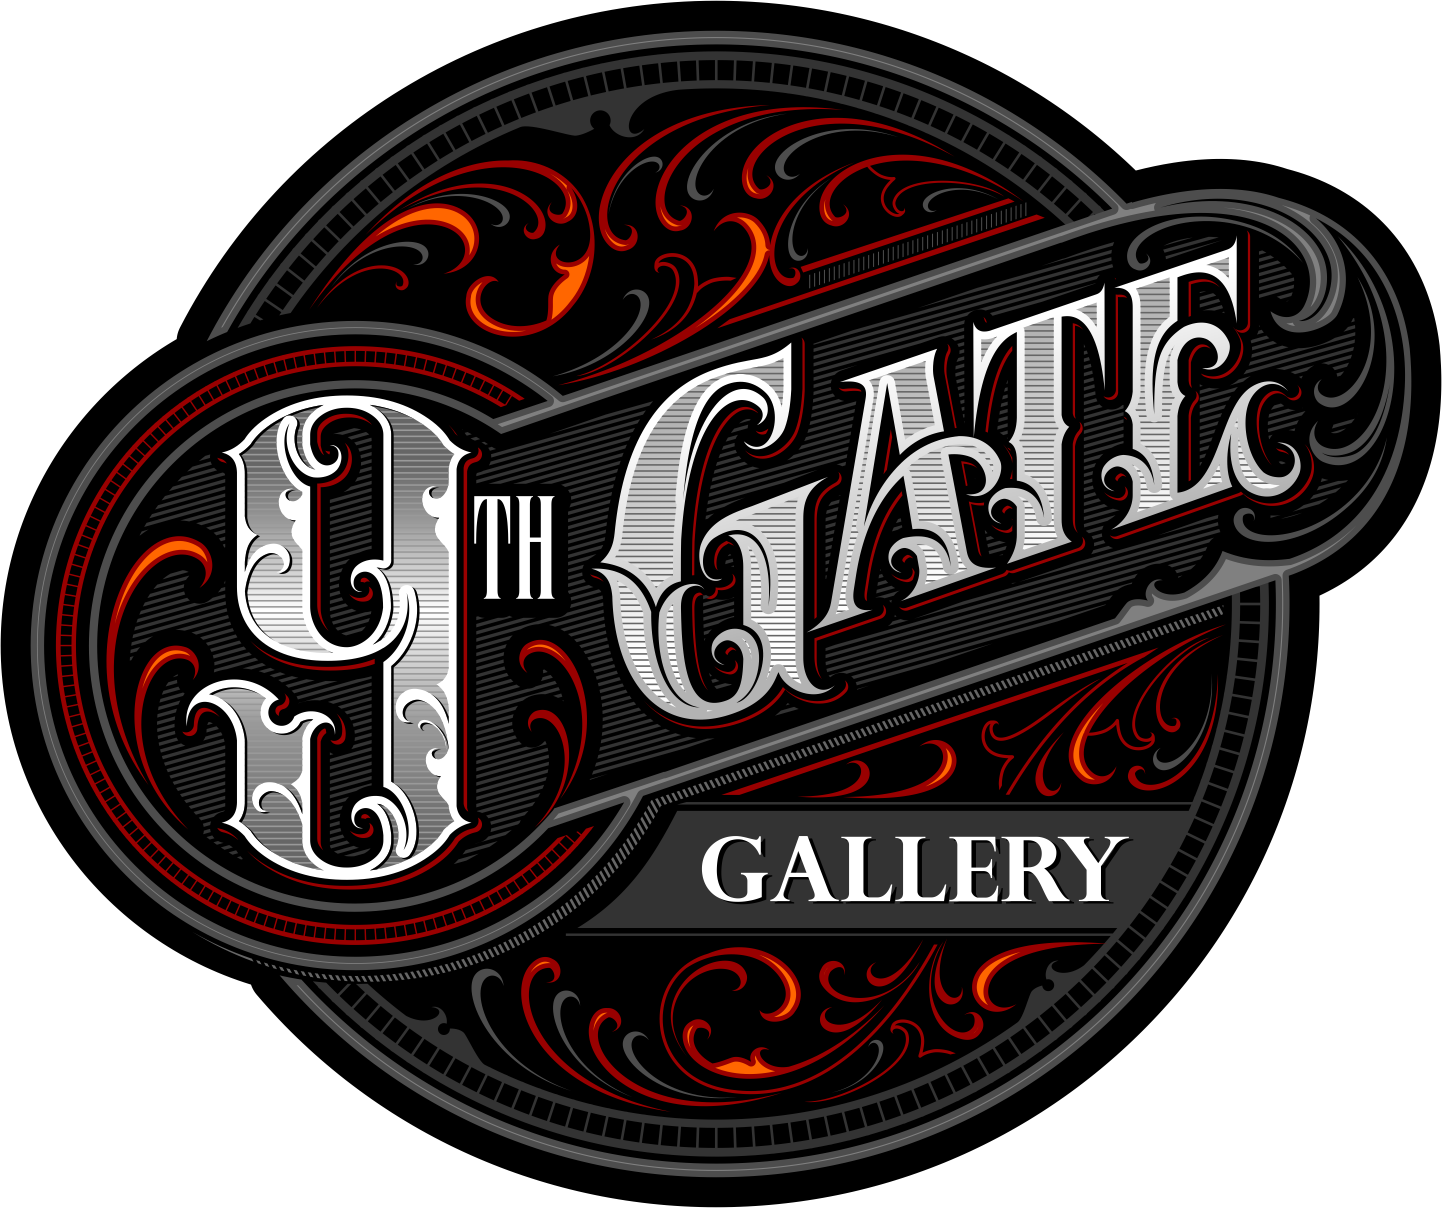 9th Gate Gallery